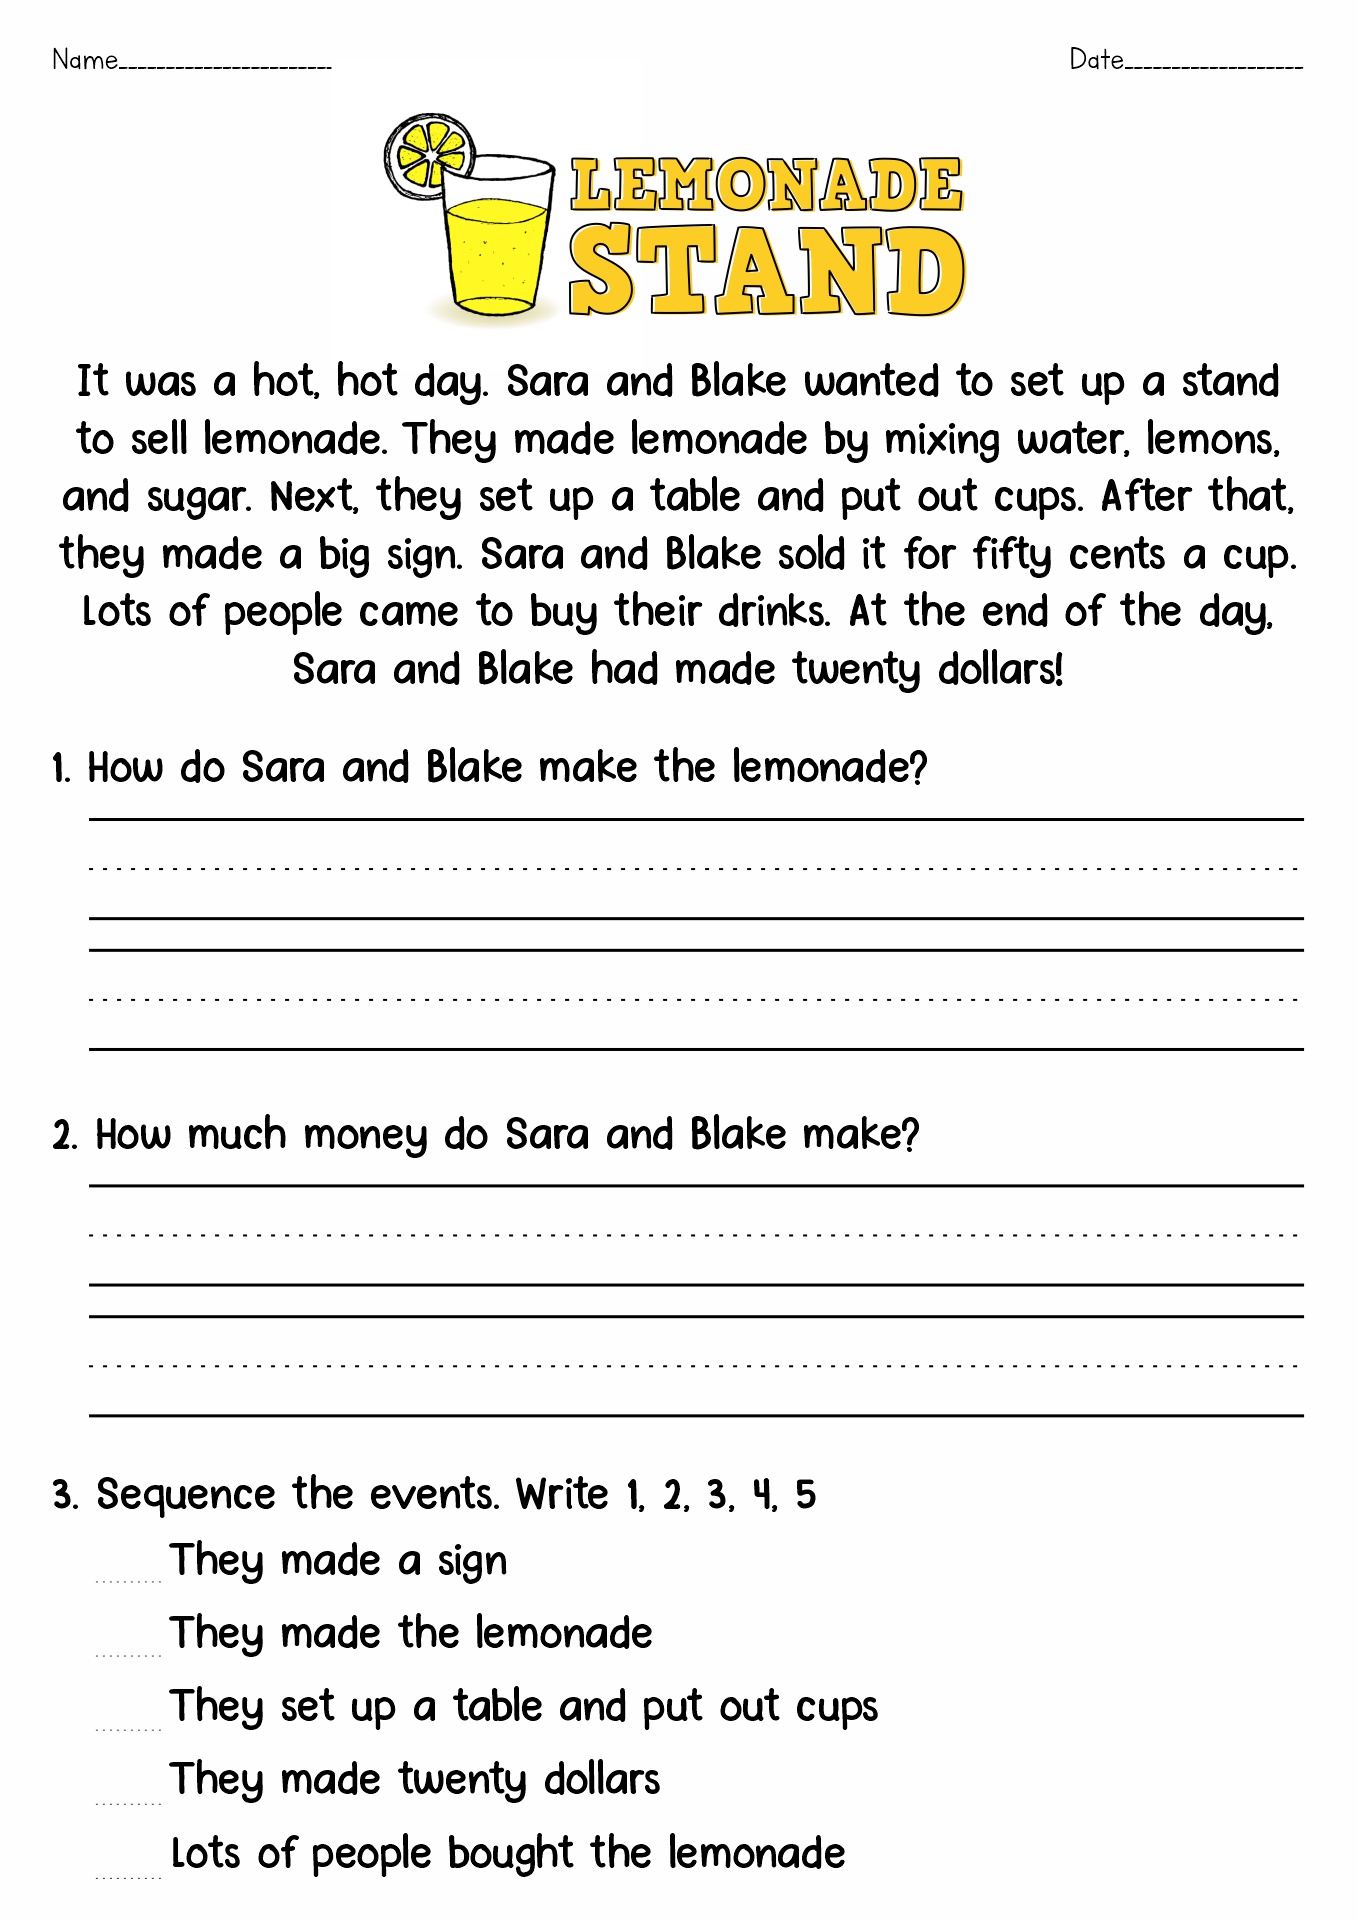 Printable First Grade Reading Comprehension Worksheets